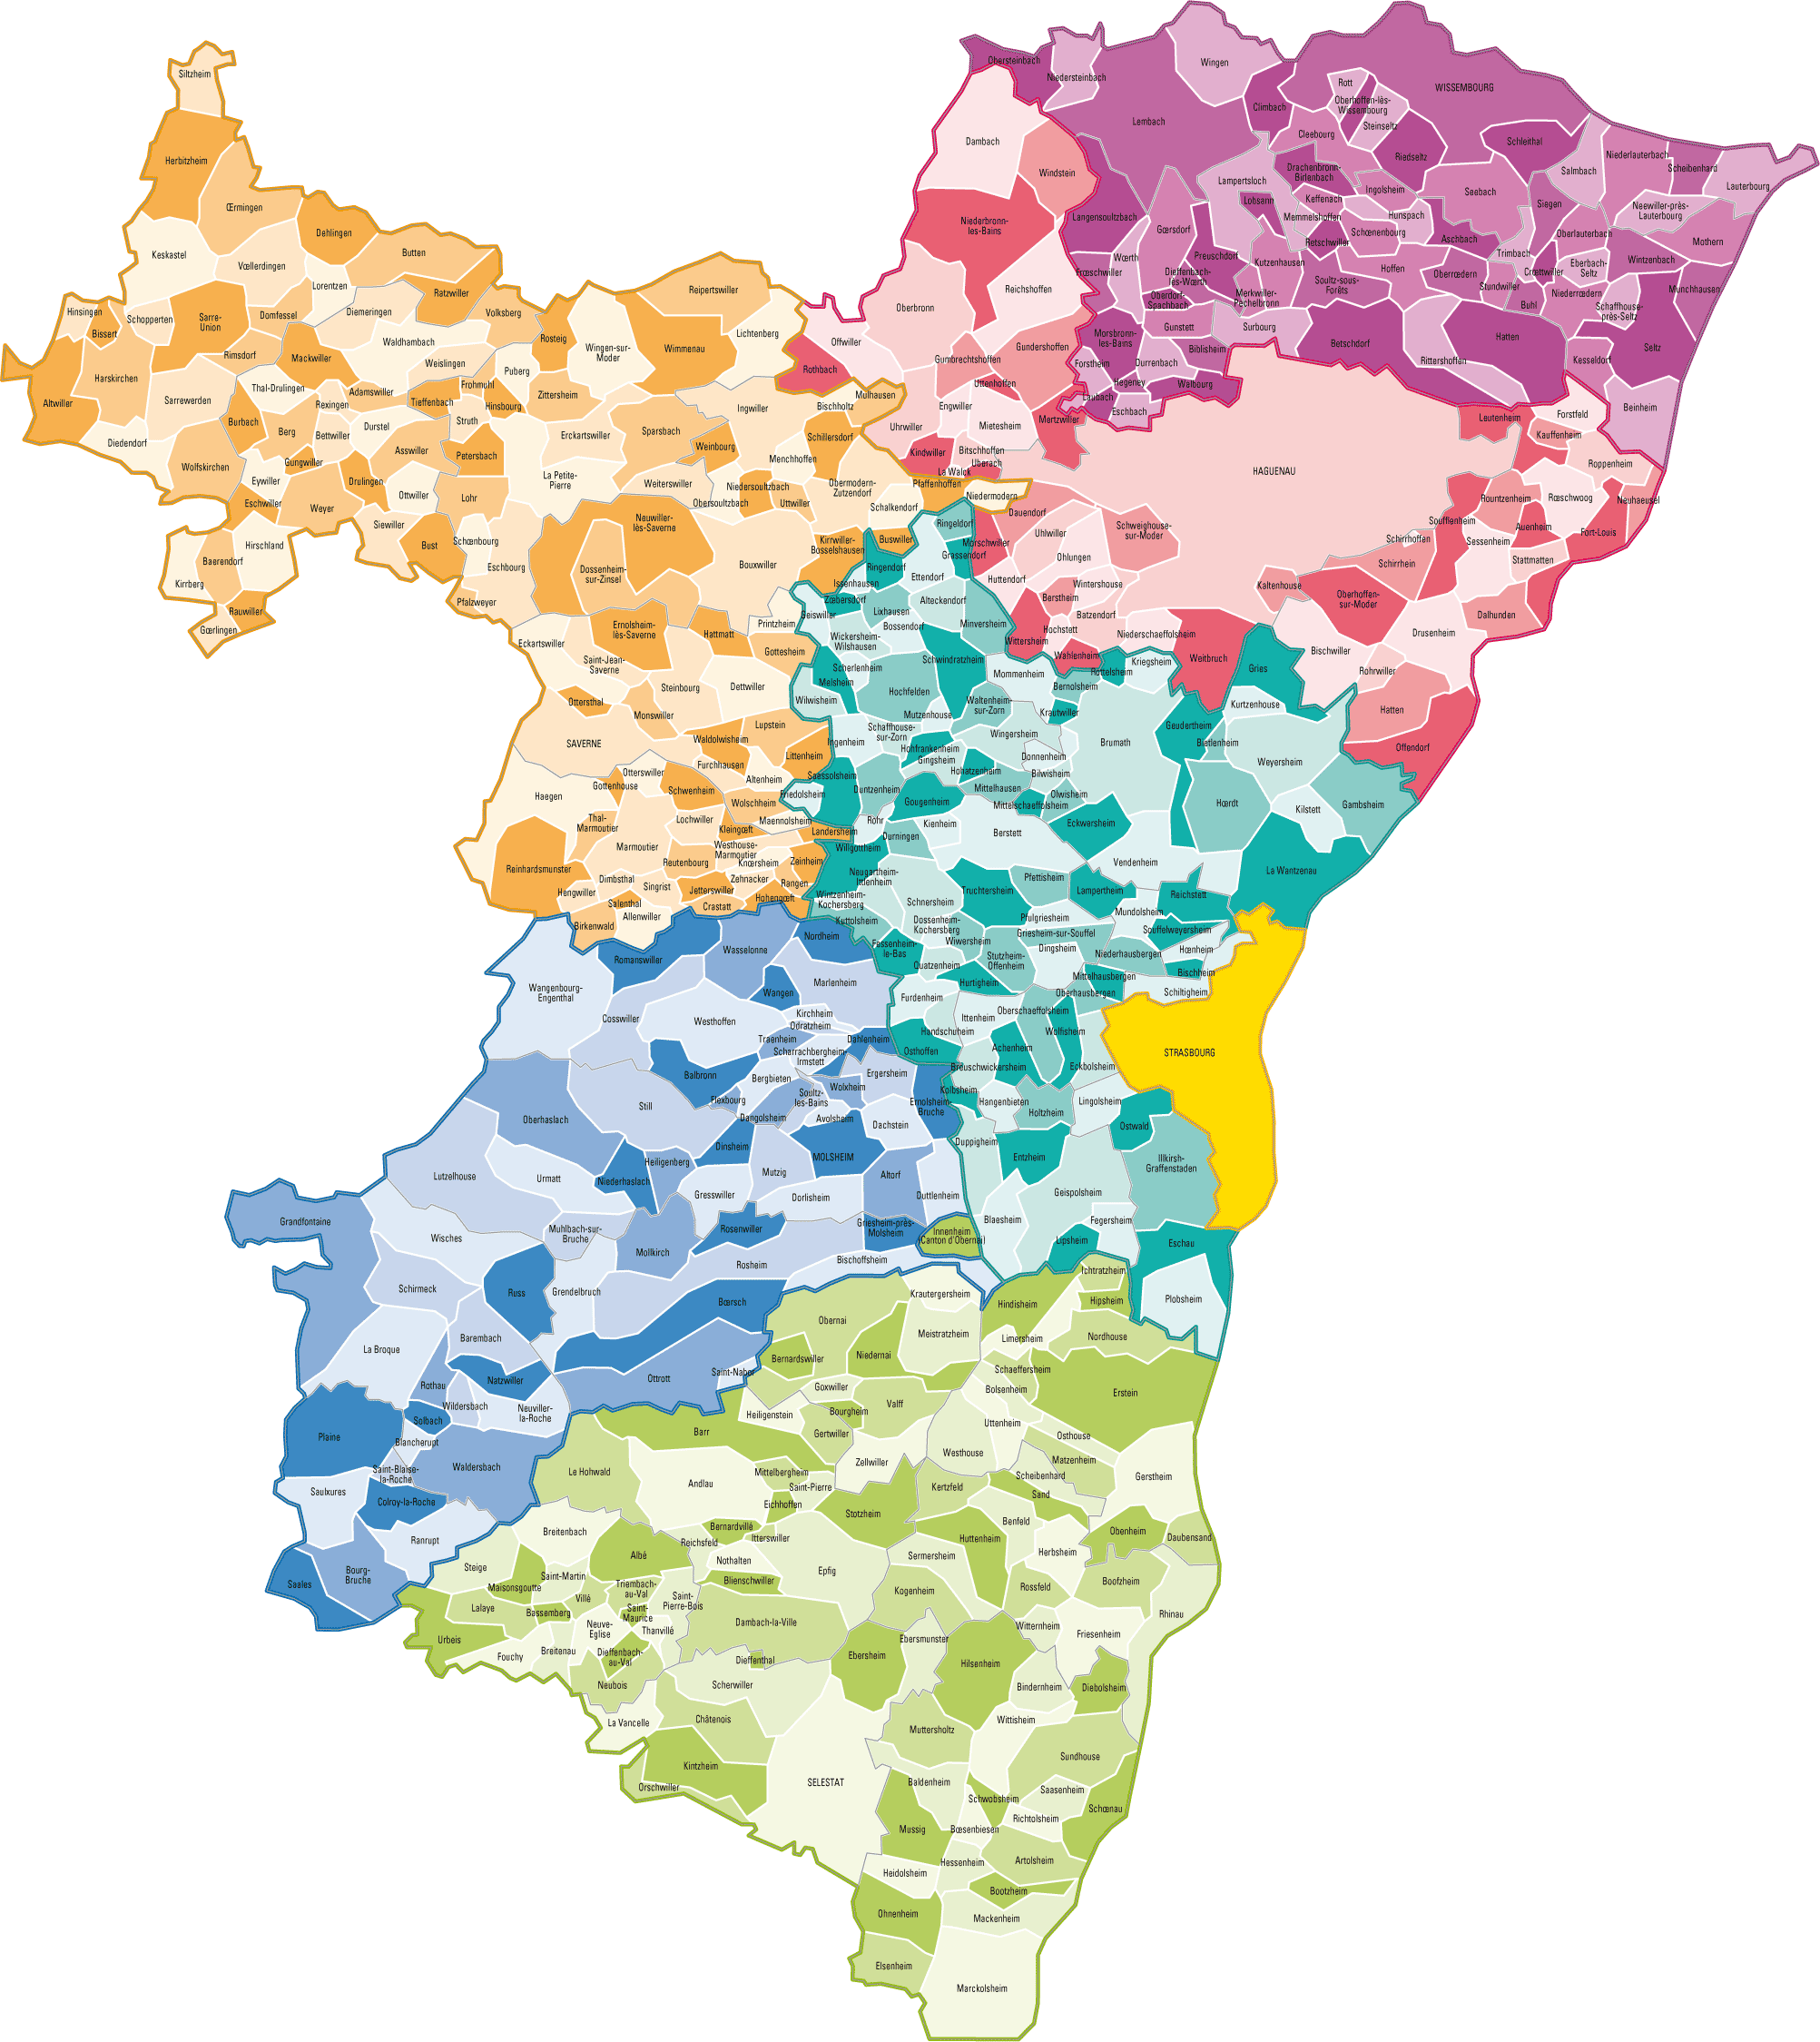 Carte du Bas-Rhin - Bas-Rhin carte du département 67